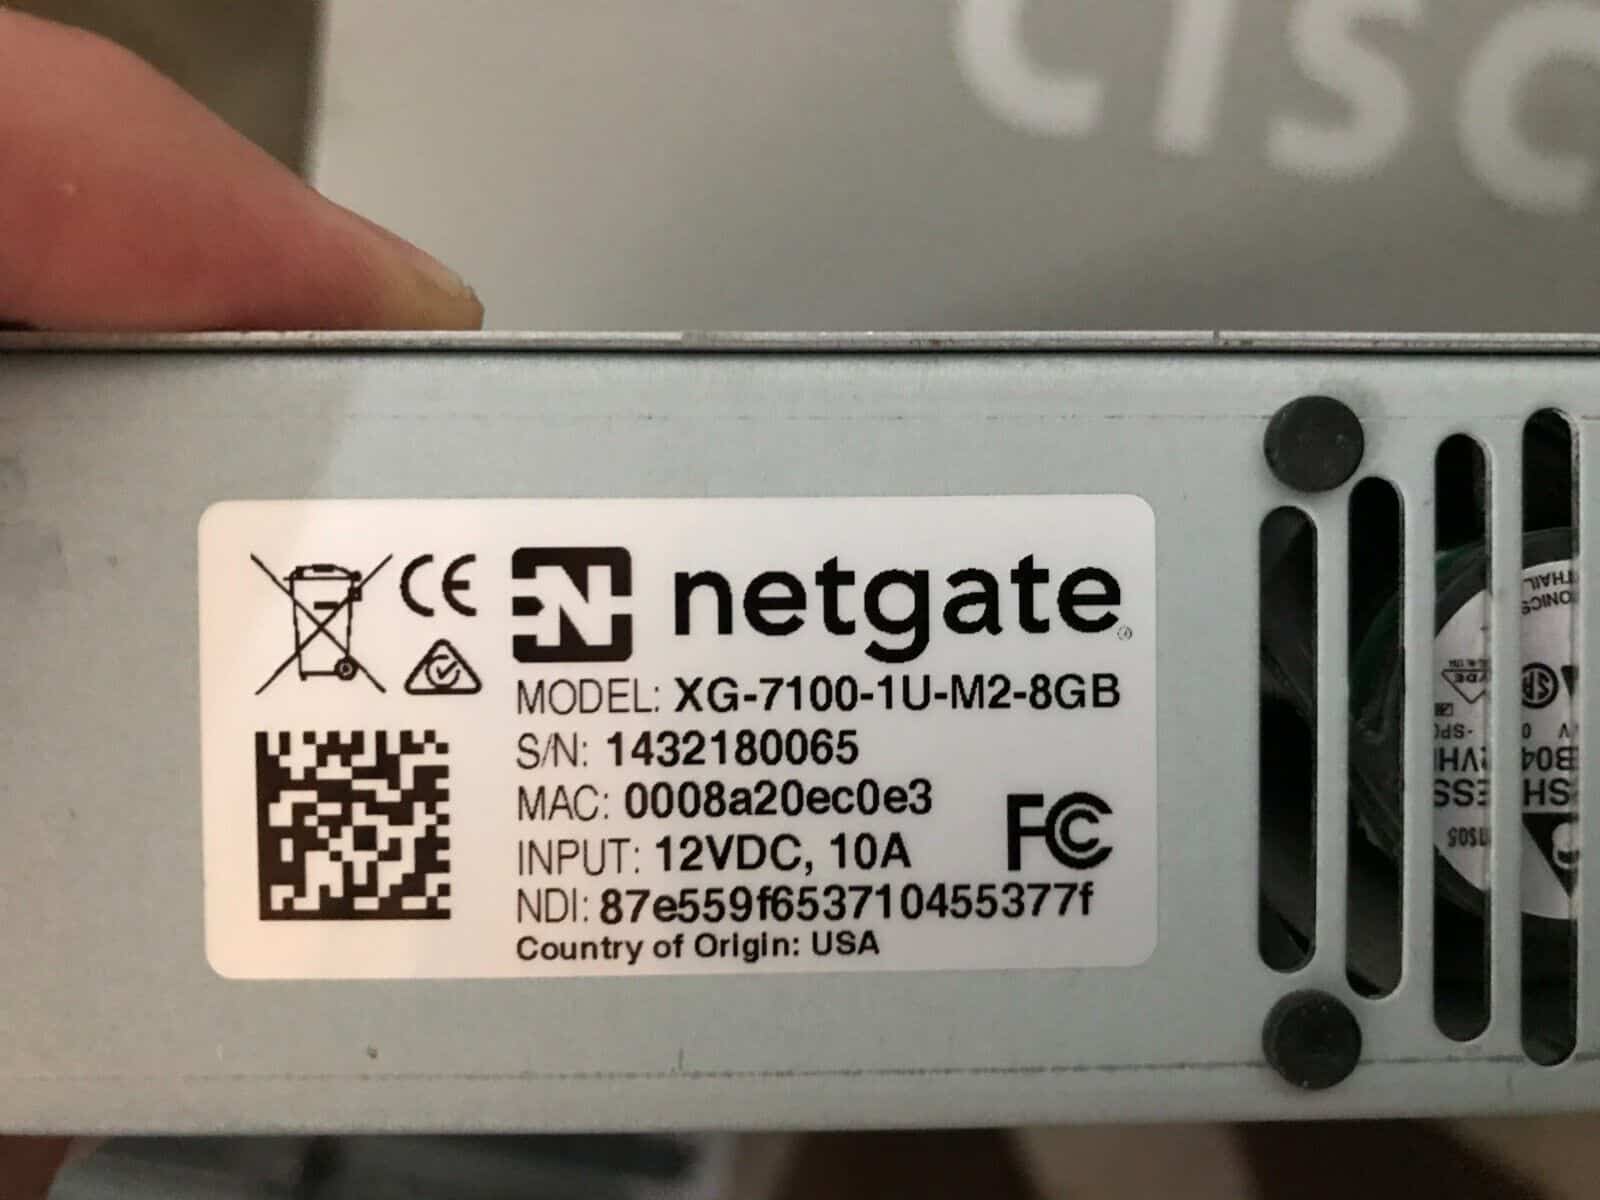 Netgate-7100-1U-M2-8GB-Security-Gateway-VPN-Router-Firewall-185506098096.jpg